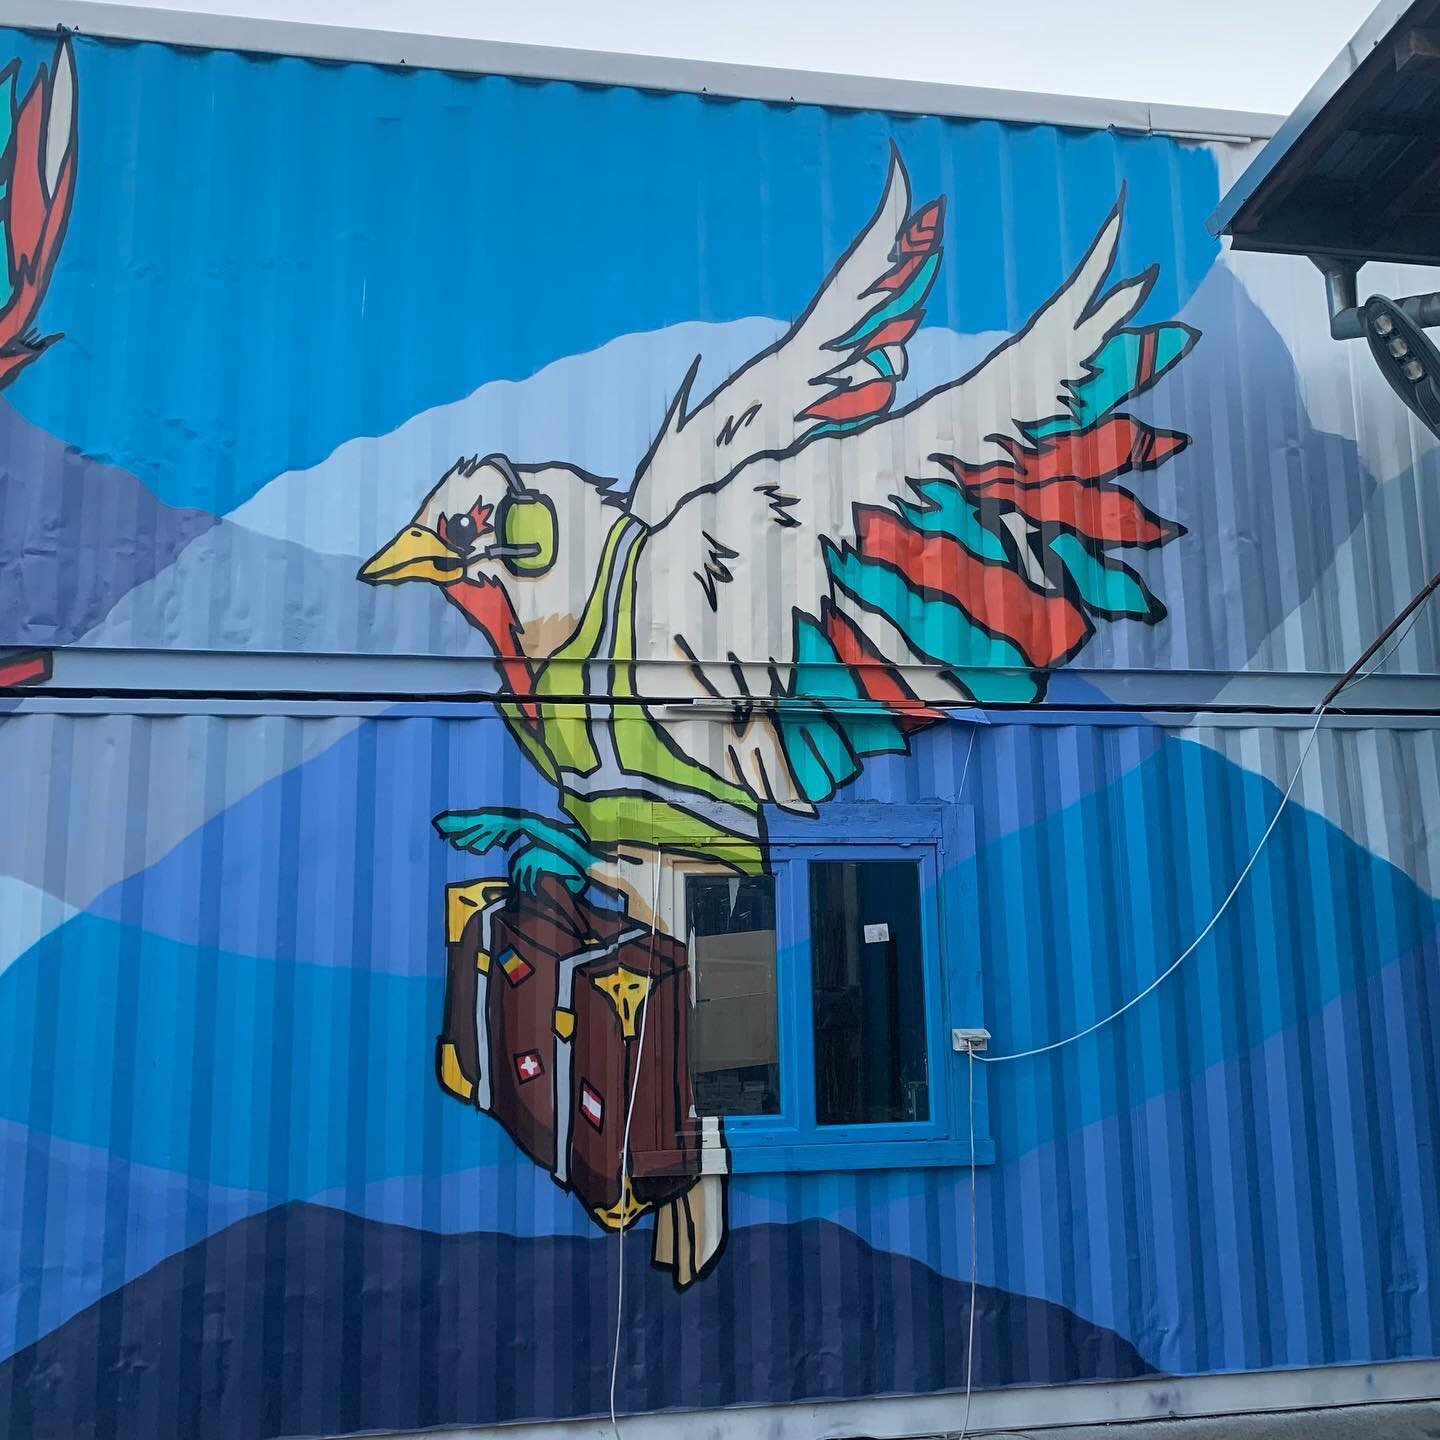 I painted so many birds

#mural #muralart #streetart #spraypaint #muralist #muralproject #art #urbanart #muralartist #painting #illustration #bucharest #birds #baggage #luggage #blue #skribl